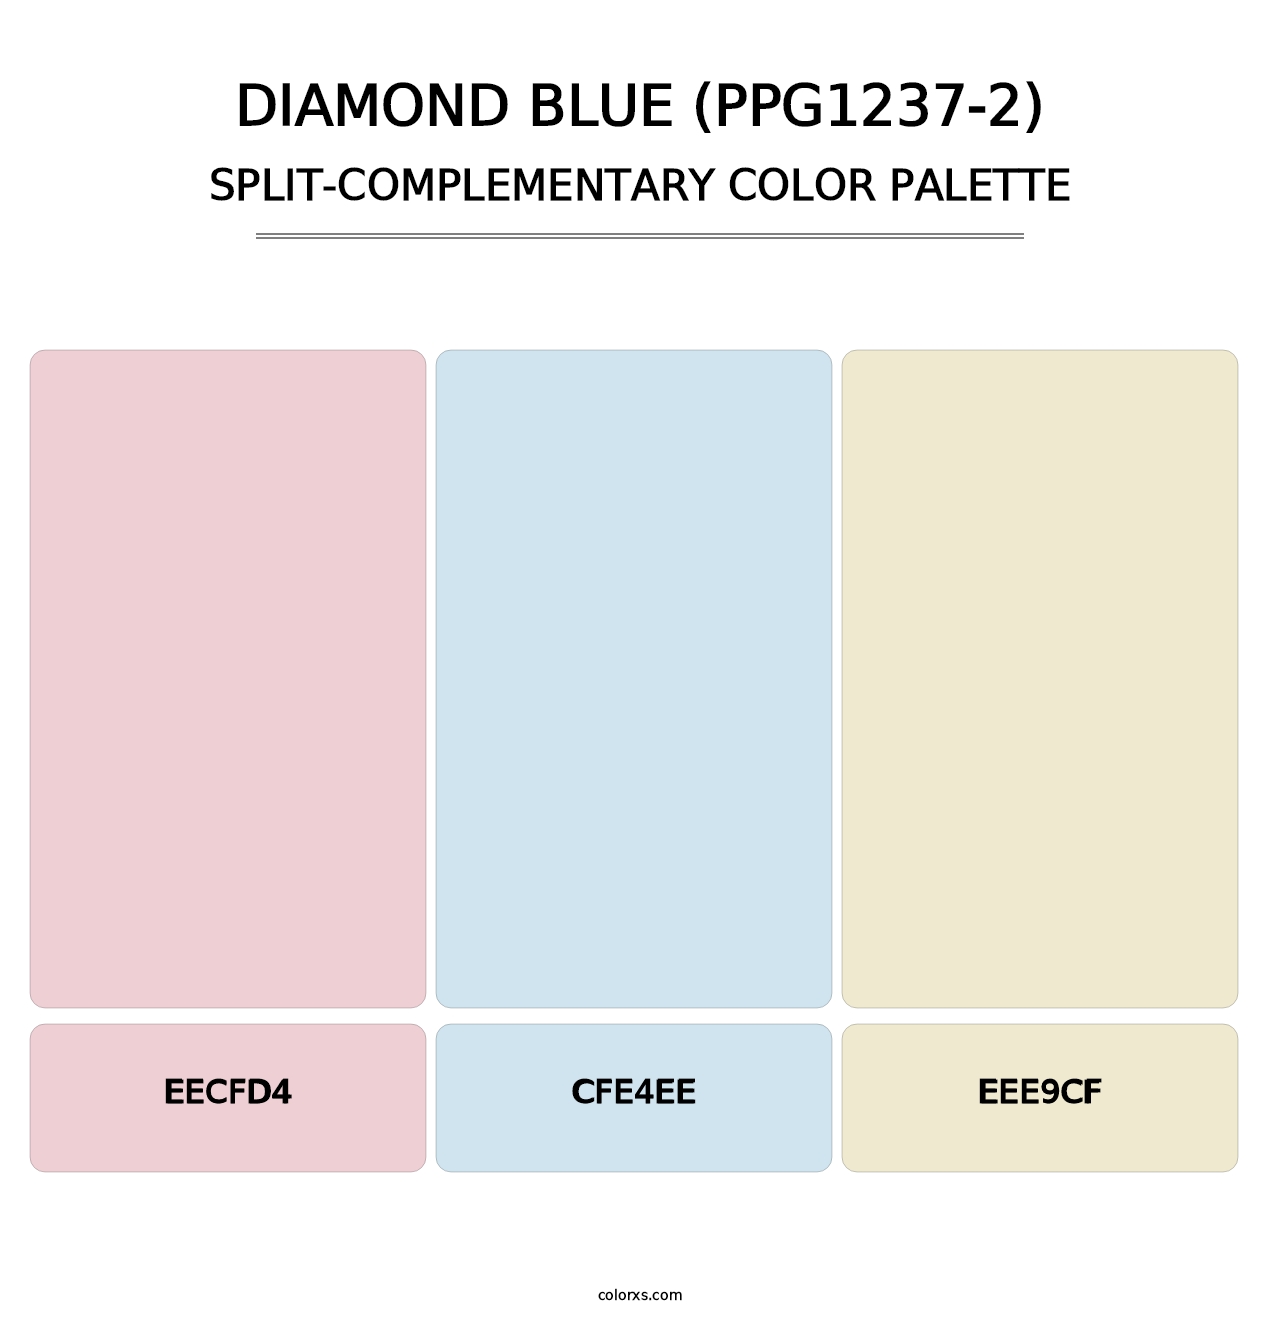 Diamond Blue (PPG1237-2) - Split-Complementary Color Palette